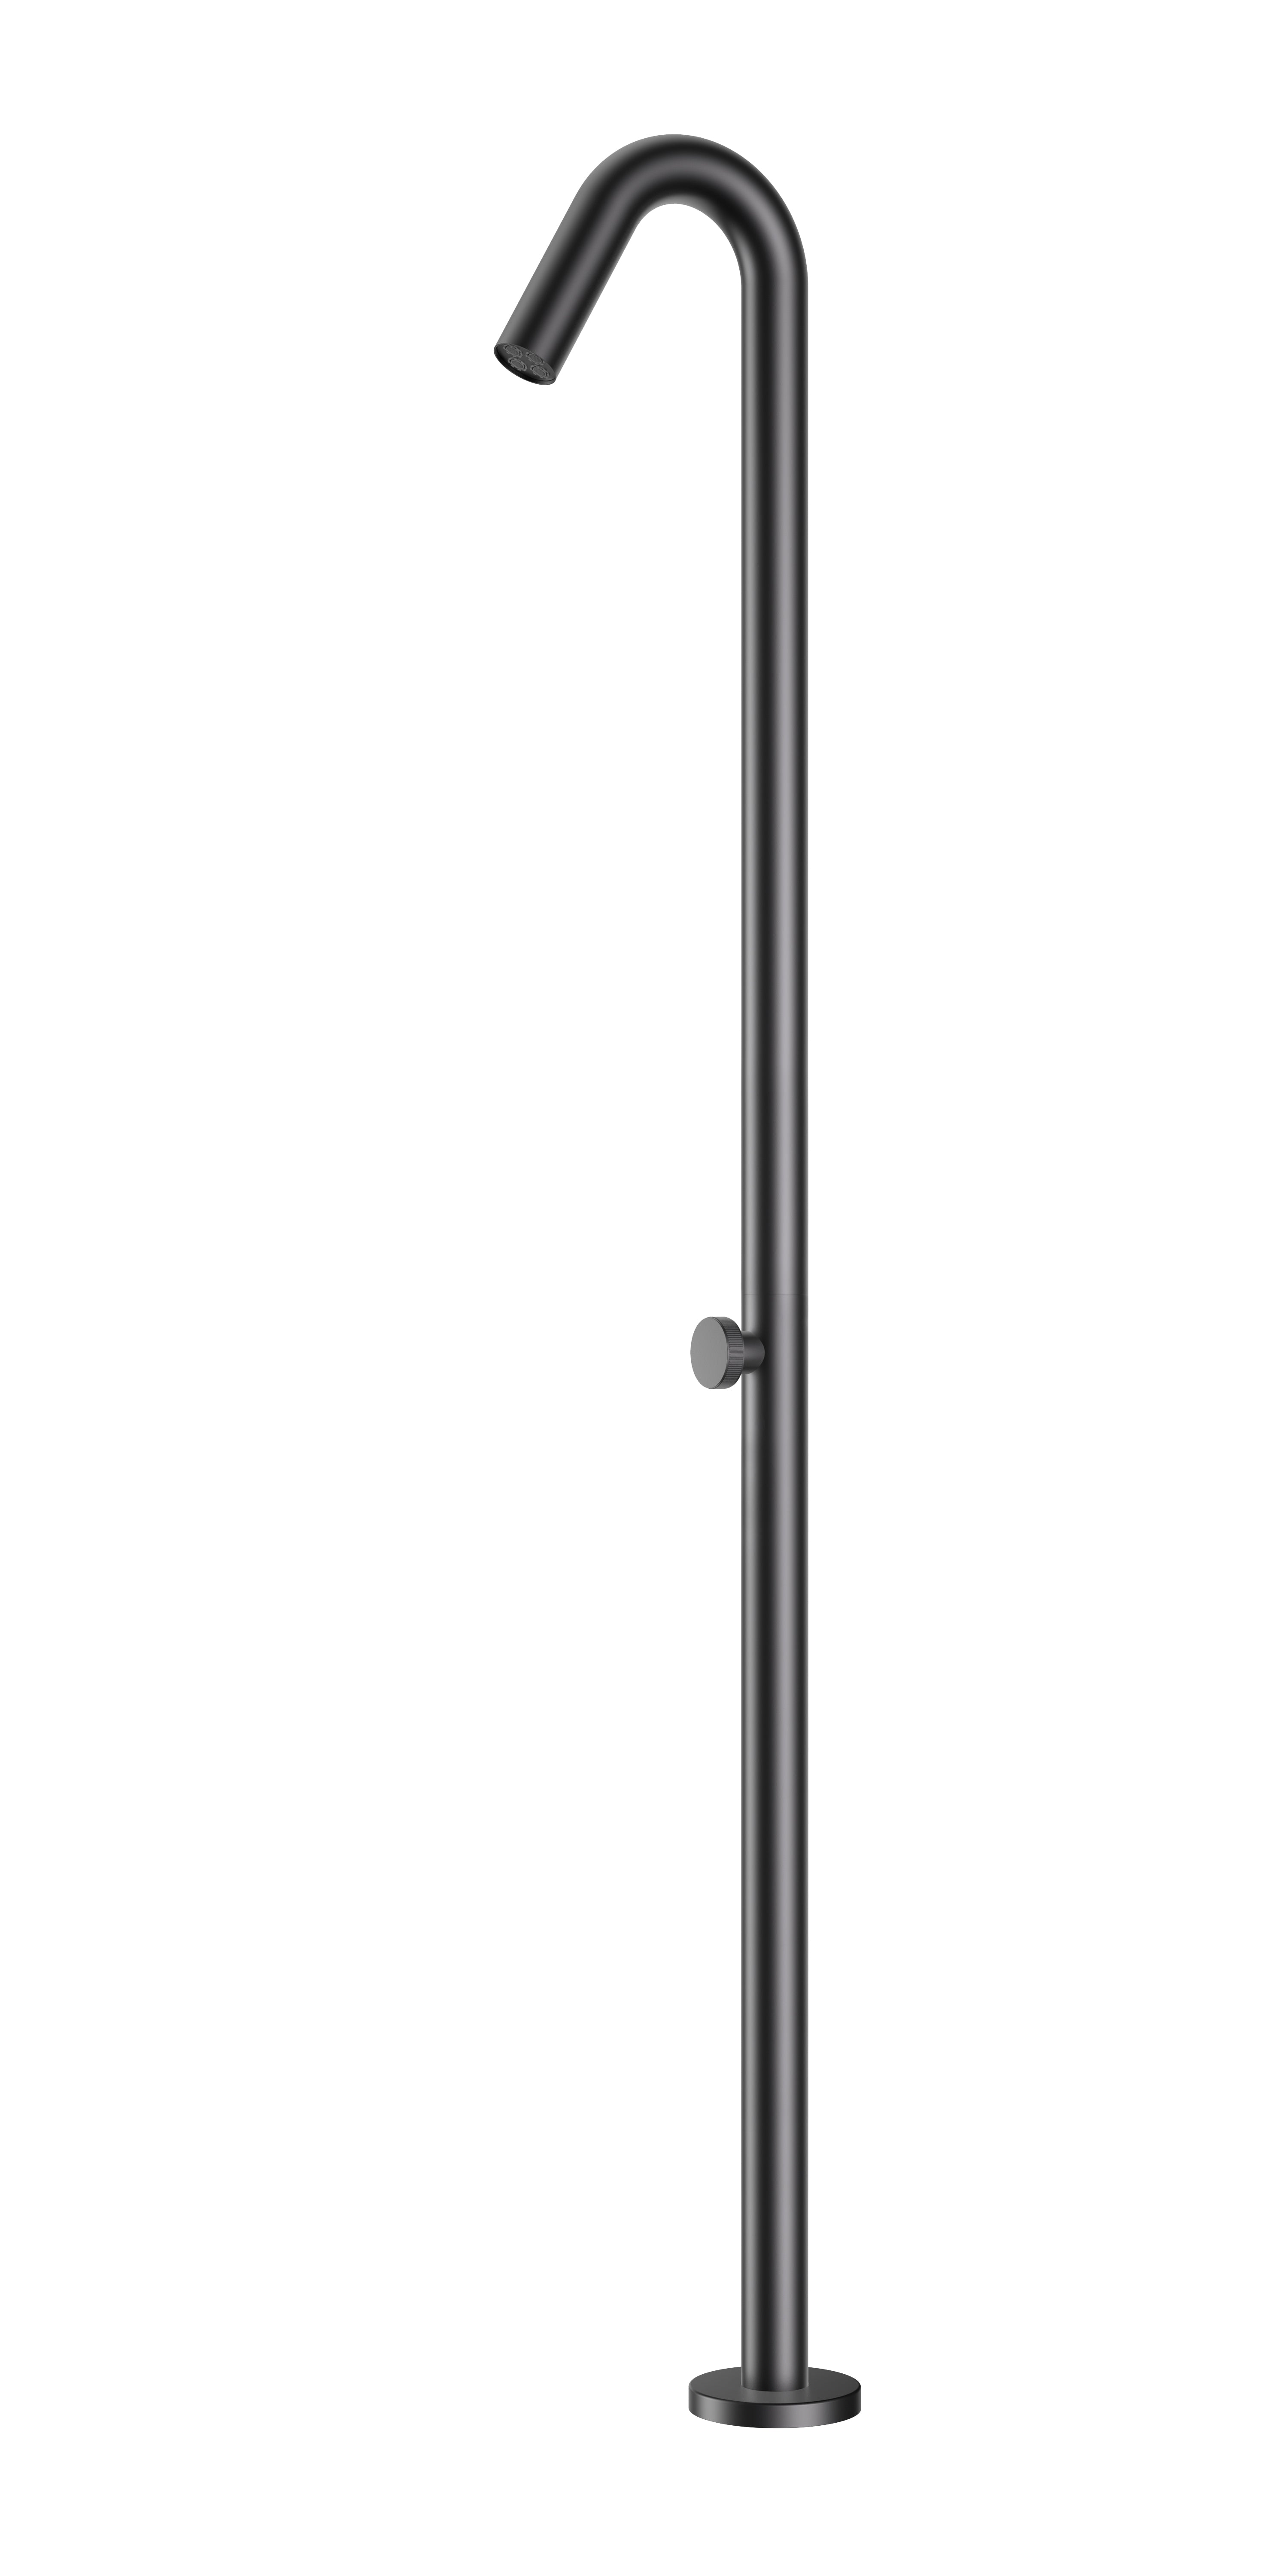 DAX Freestanding Outdoor Shower Pipe (DAX-807282)